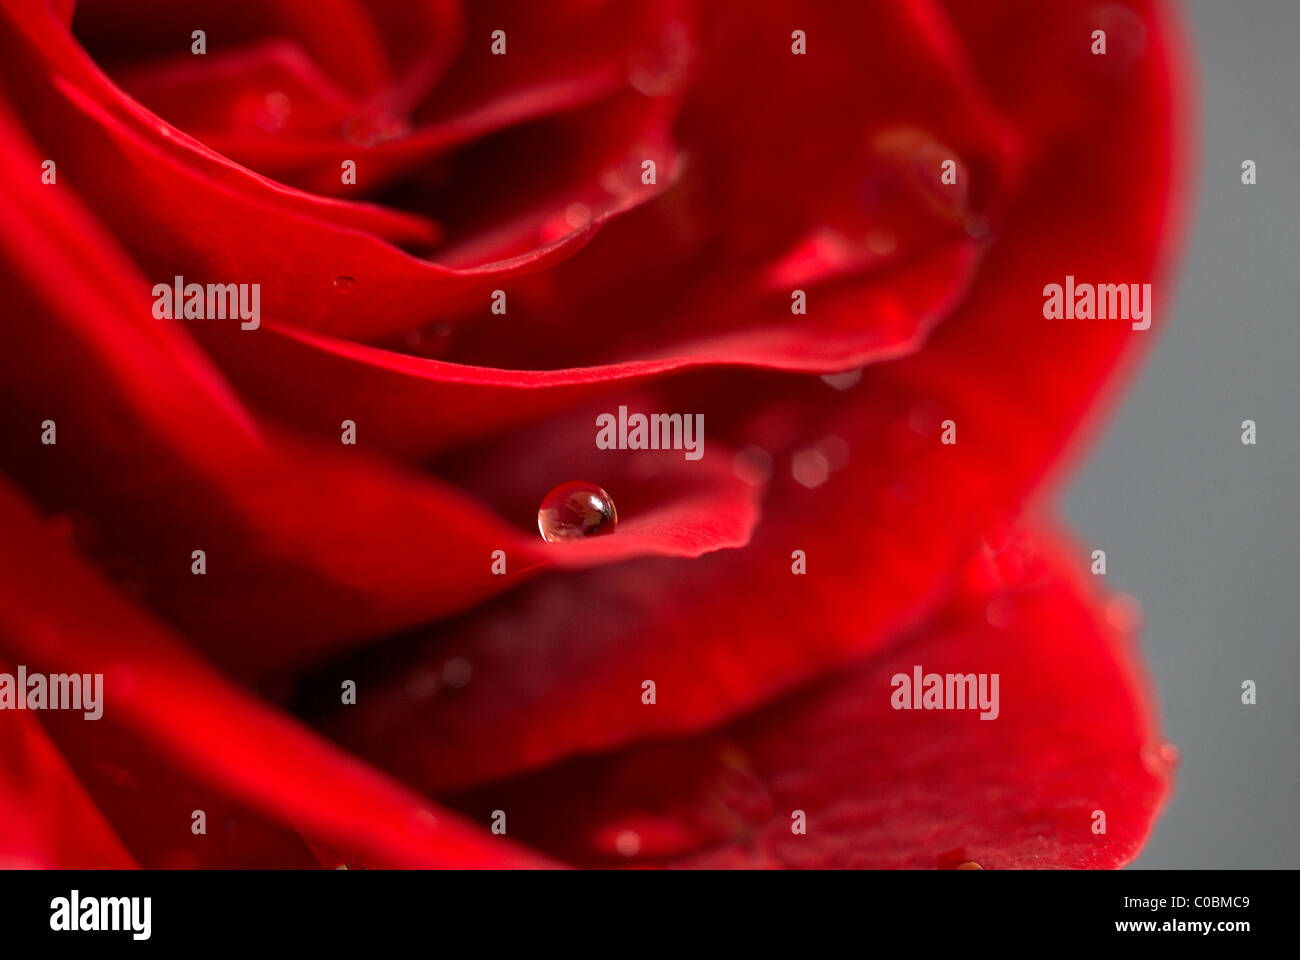 rote rose, Tautropfen auf Rose, Nahaufnahme Tautropfen auf Rosette Stockfoto